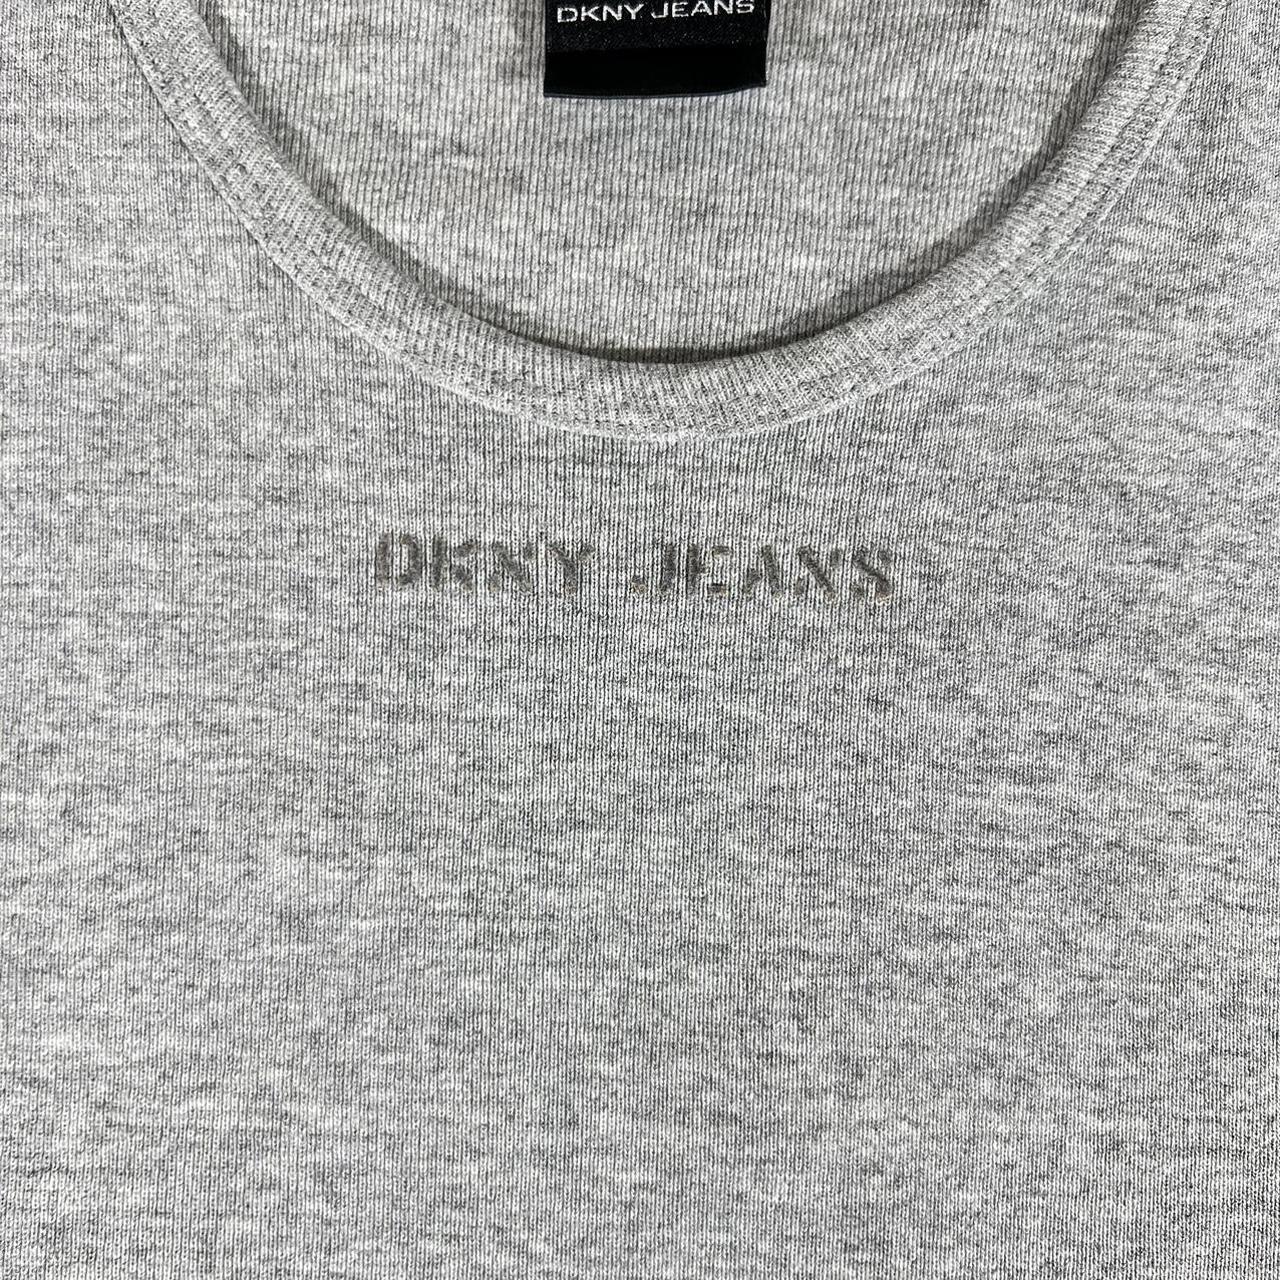 DKNY Women's Grey and Black Vest (4)